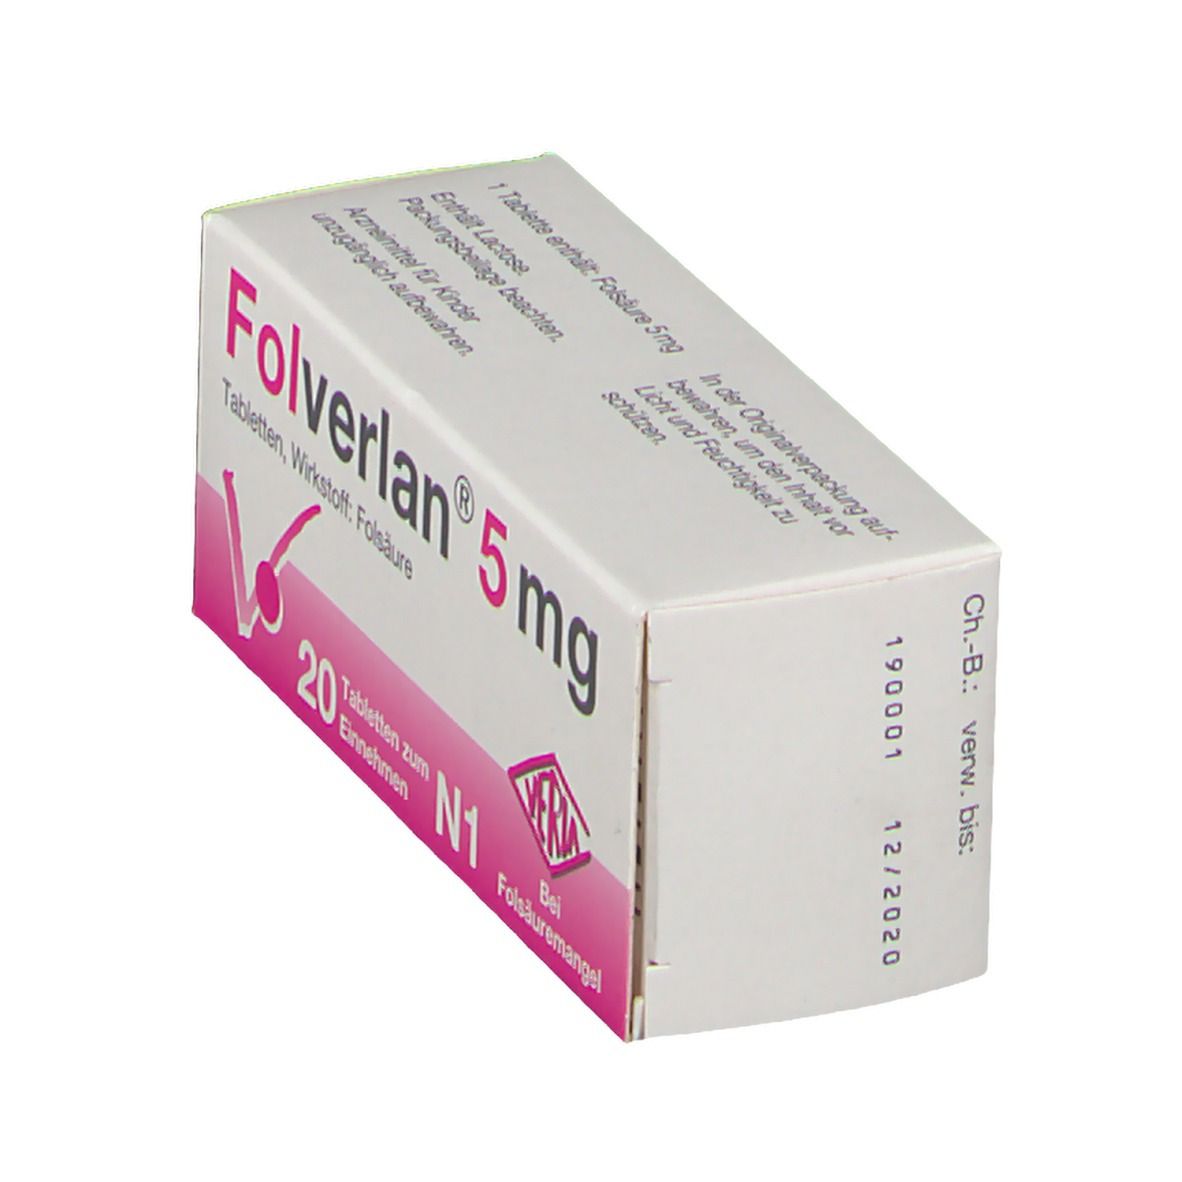 Folverlan® 5 mg Tabletten